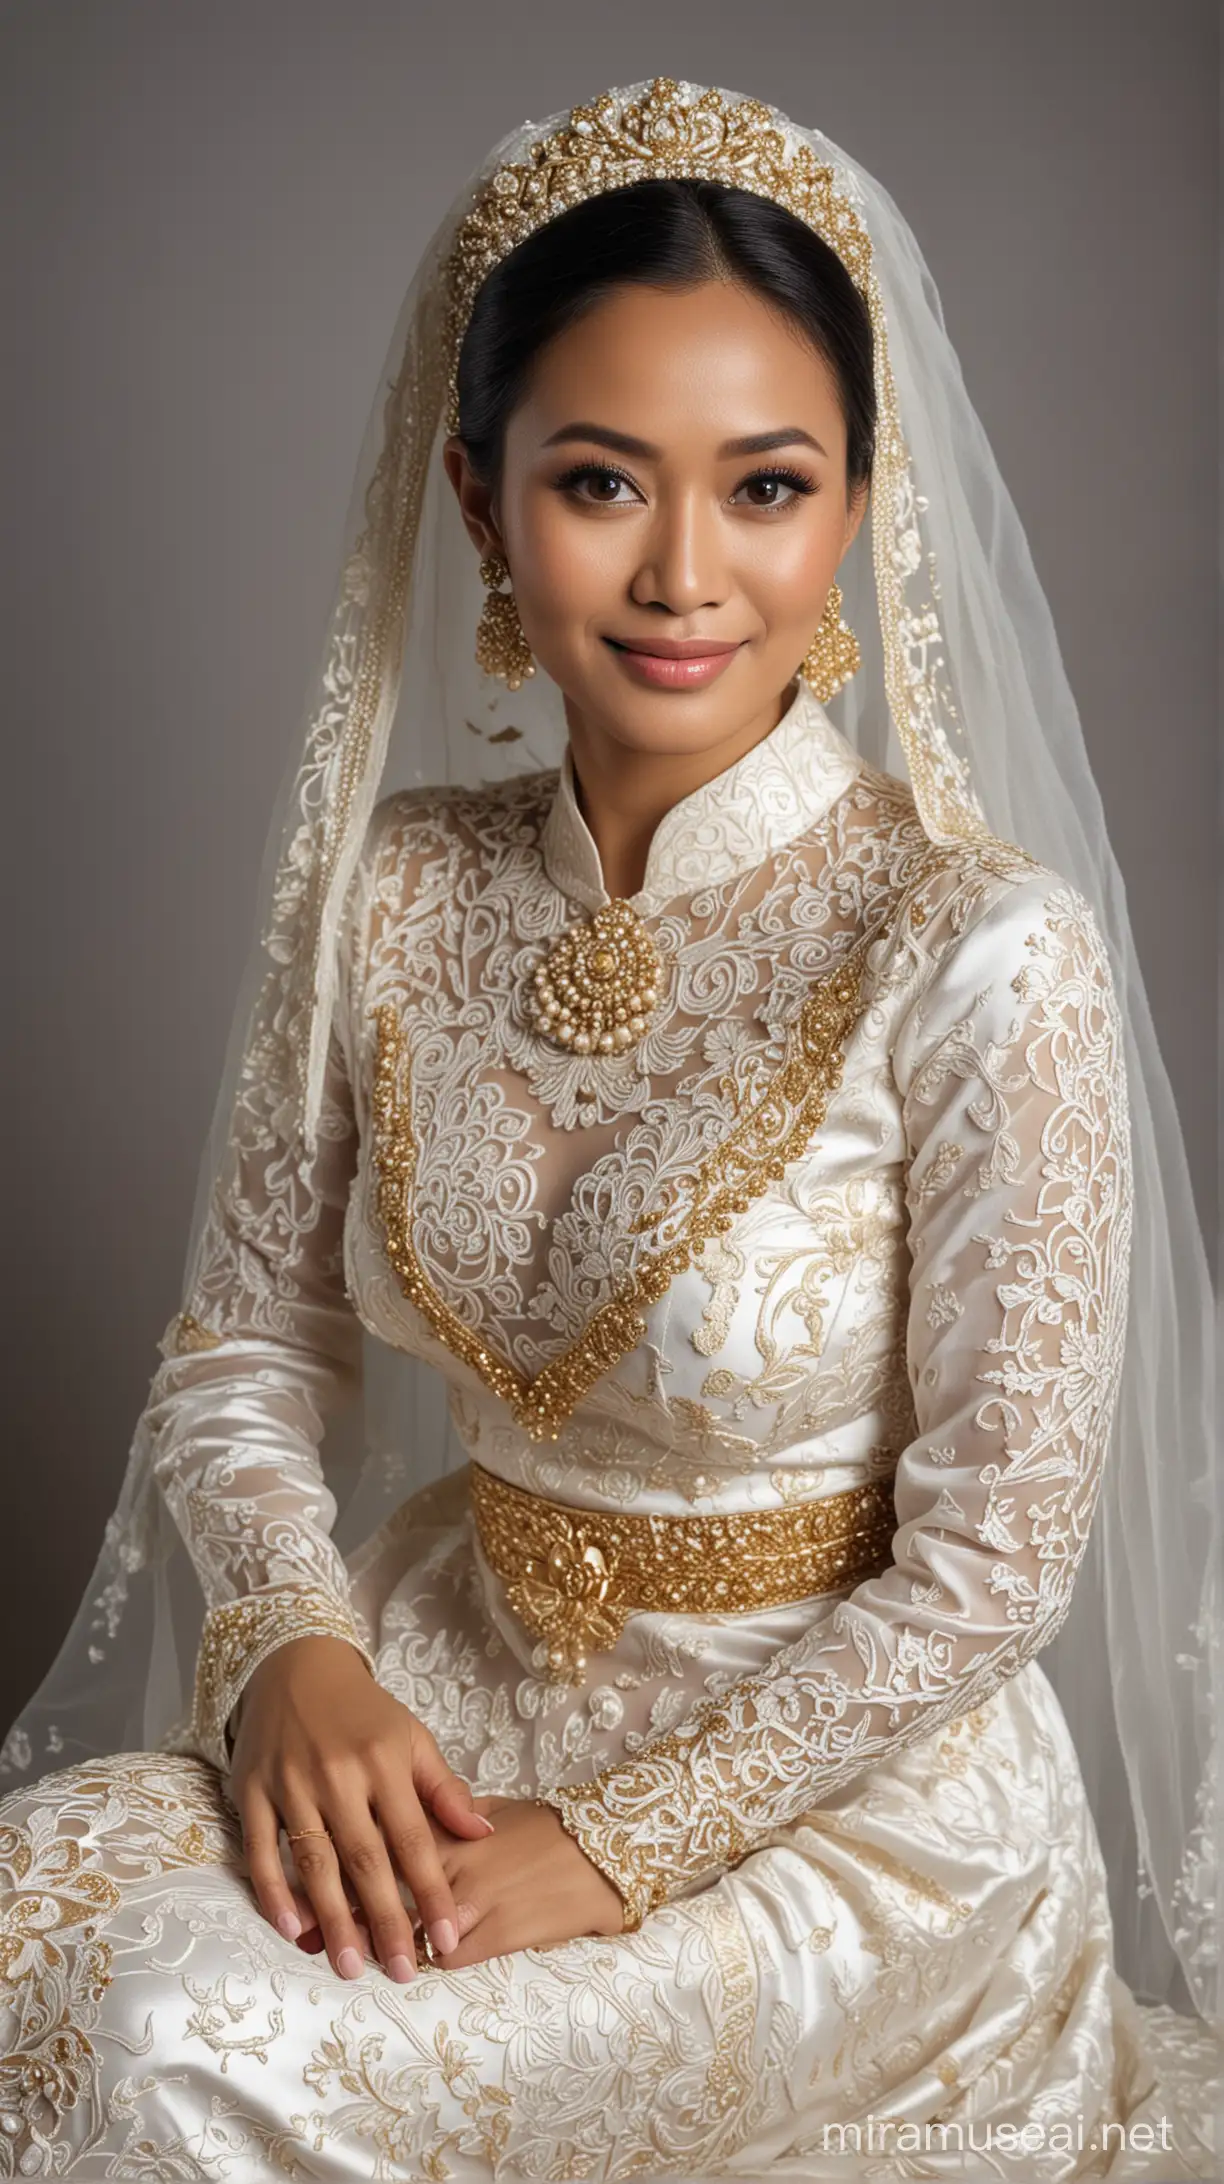 Graceful 41YearOld Indonesian Woman in Elegant Malay Wedding Attire